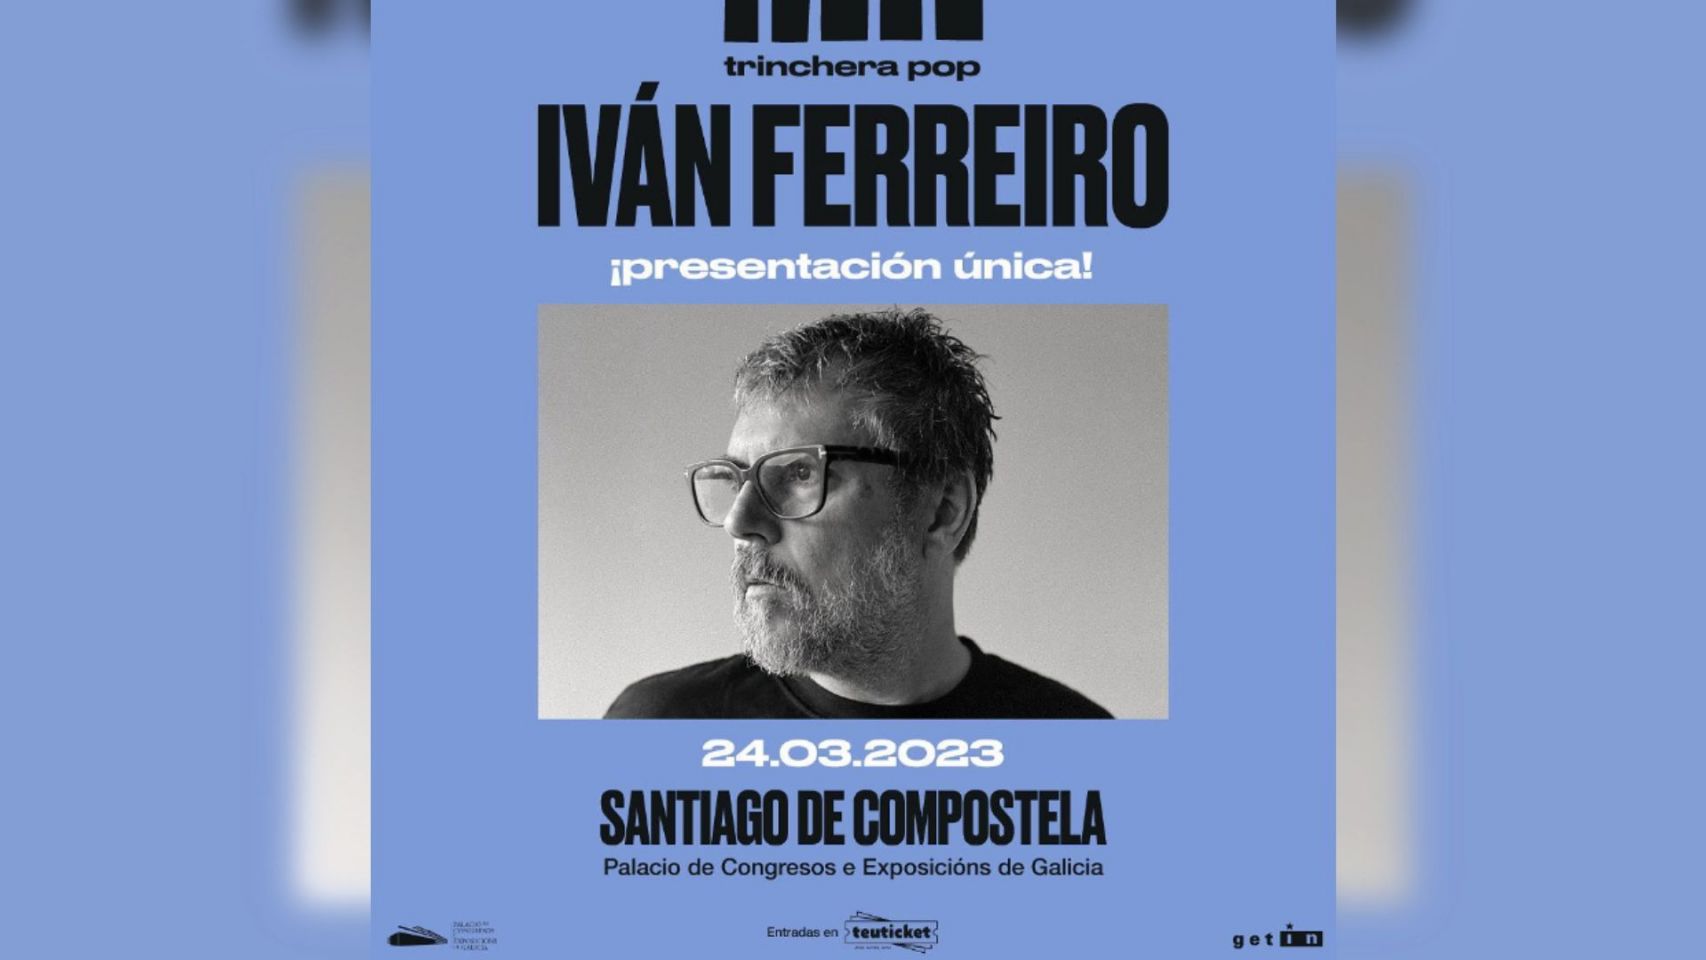 Iván Ferreiro presenta su nuevo disco, 'Trinchera pop'.